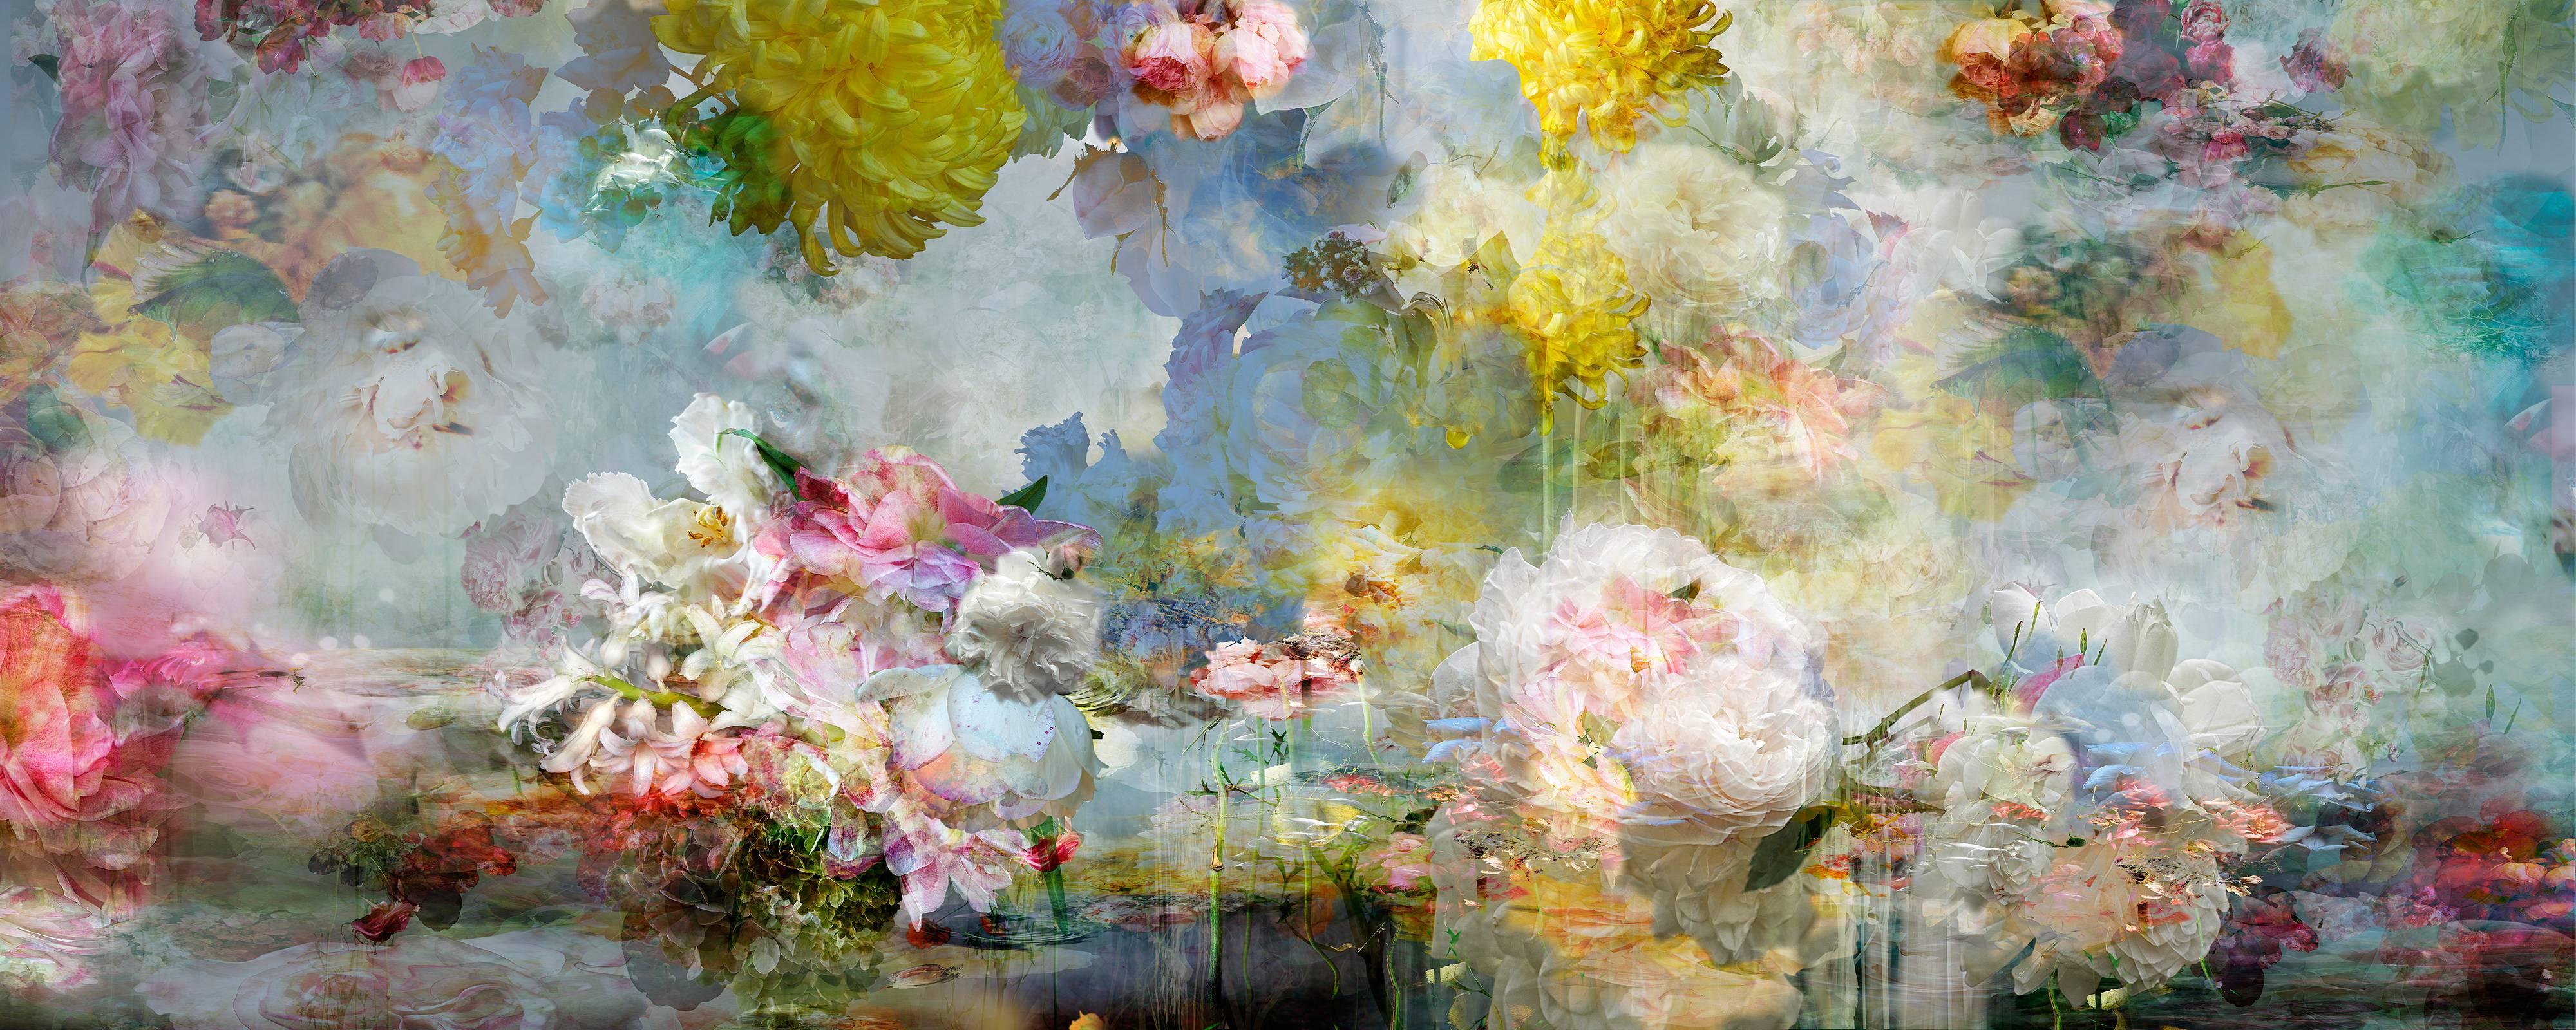 Isabelle Menin Still-Life Photograph - Song for dead heroes #7 - Floral still life landscape composition pastel color